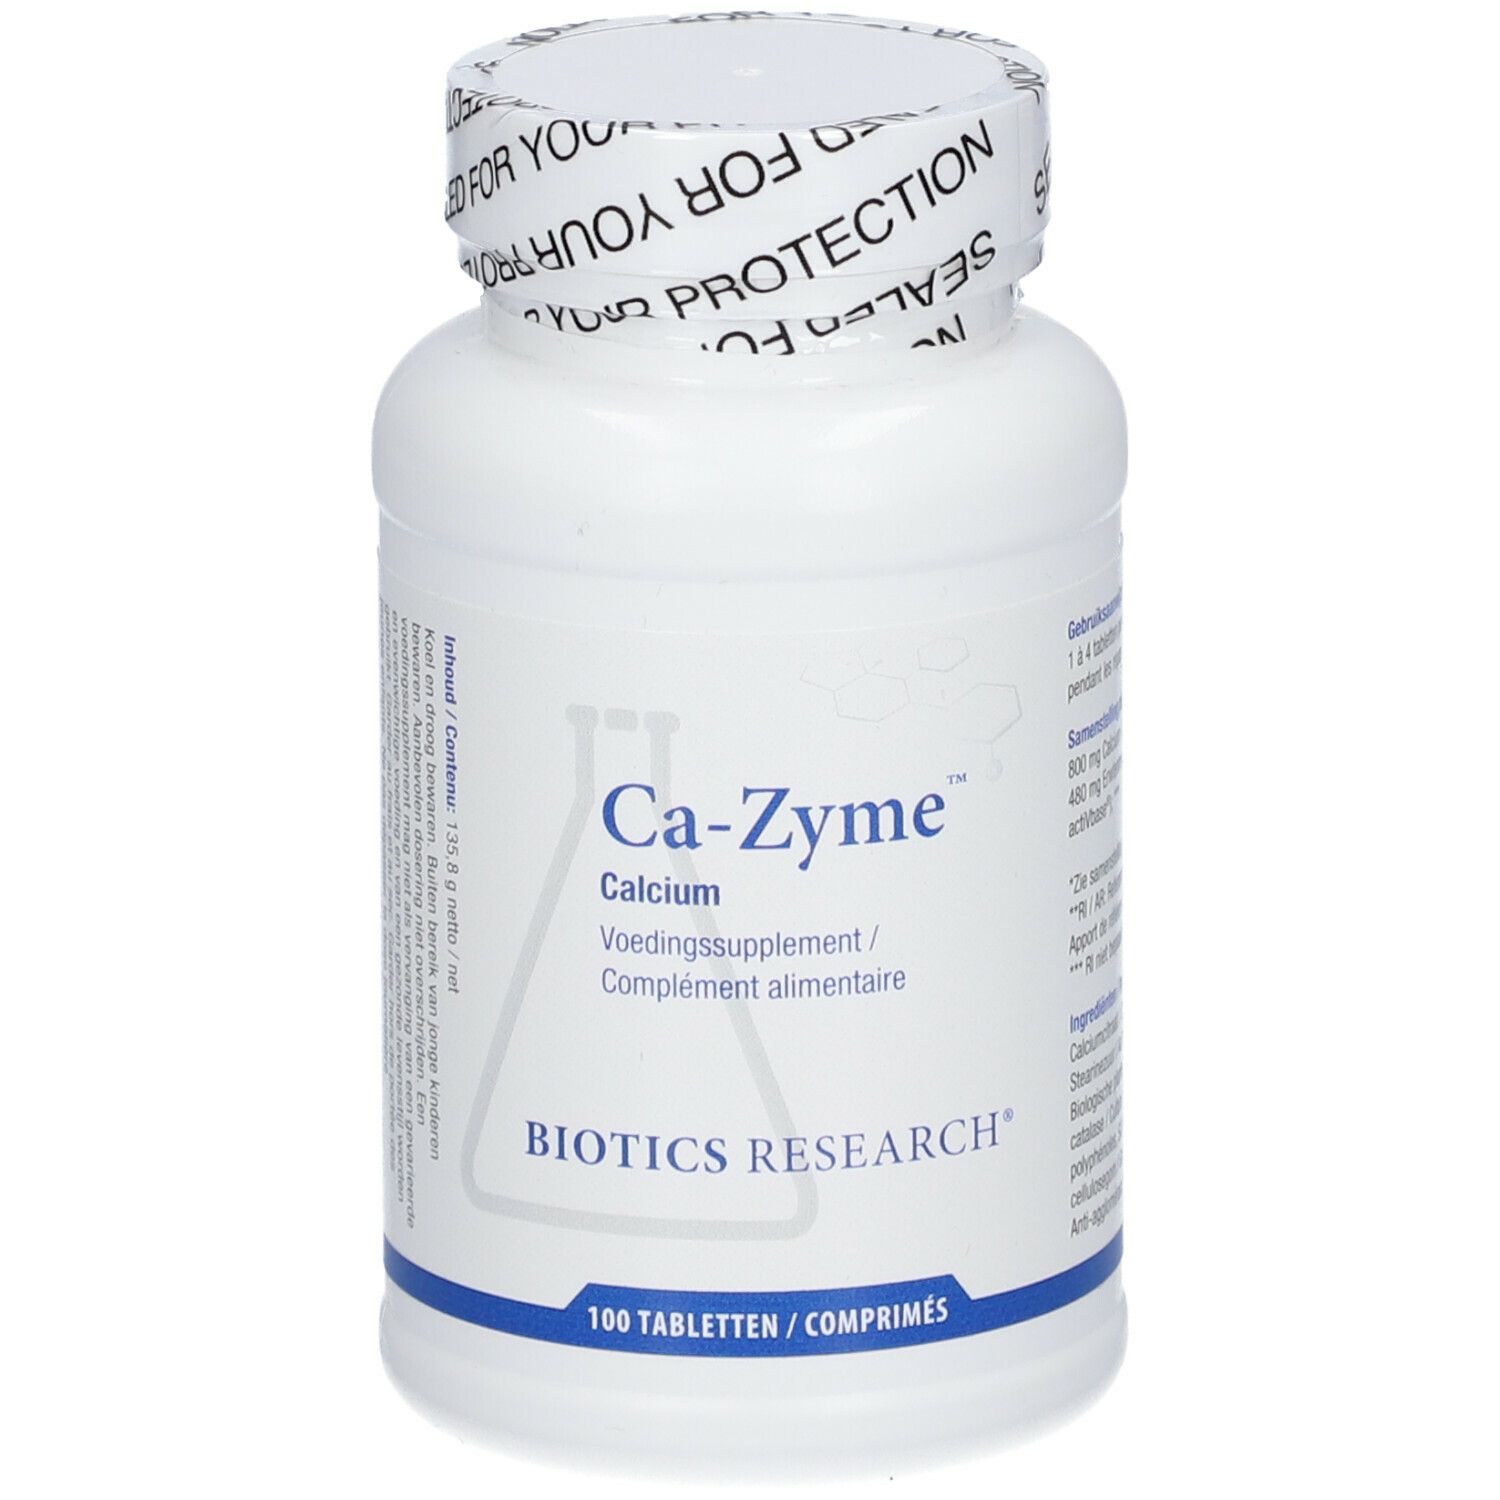 Biotics Research® Ca-Zyme™